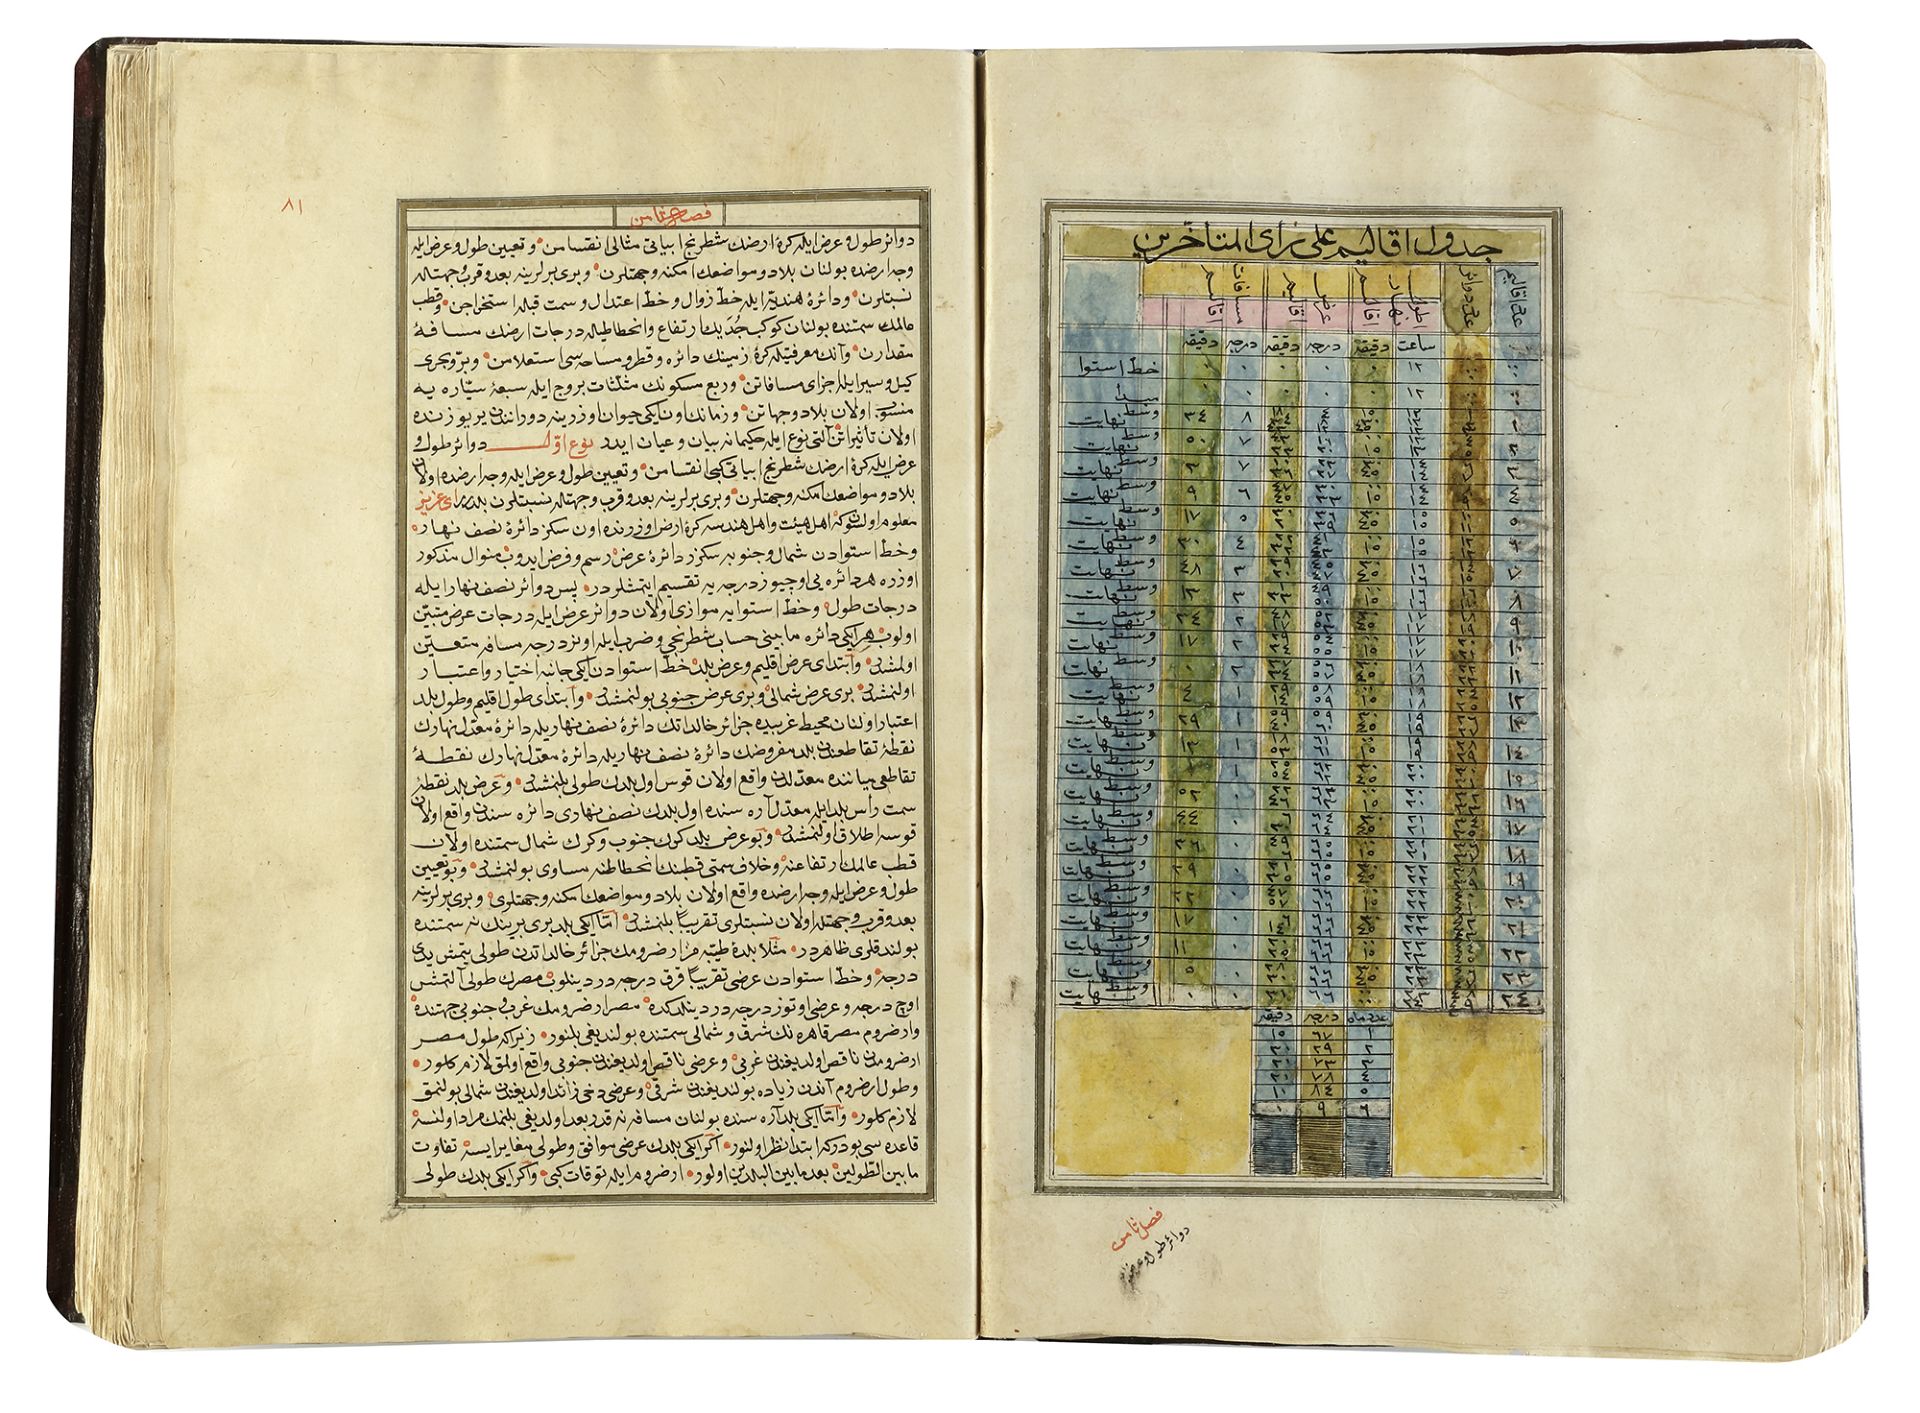 MARIFETNAME, IBRAHIM HAKKI, COPIED BY SAE'D ALLAH BIN ALI BIN AHMED, TURKEY, 1221 AH/1806 AD - Image 28 of 58